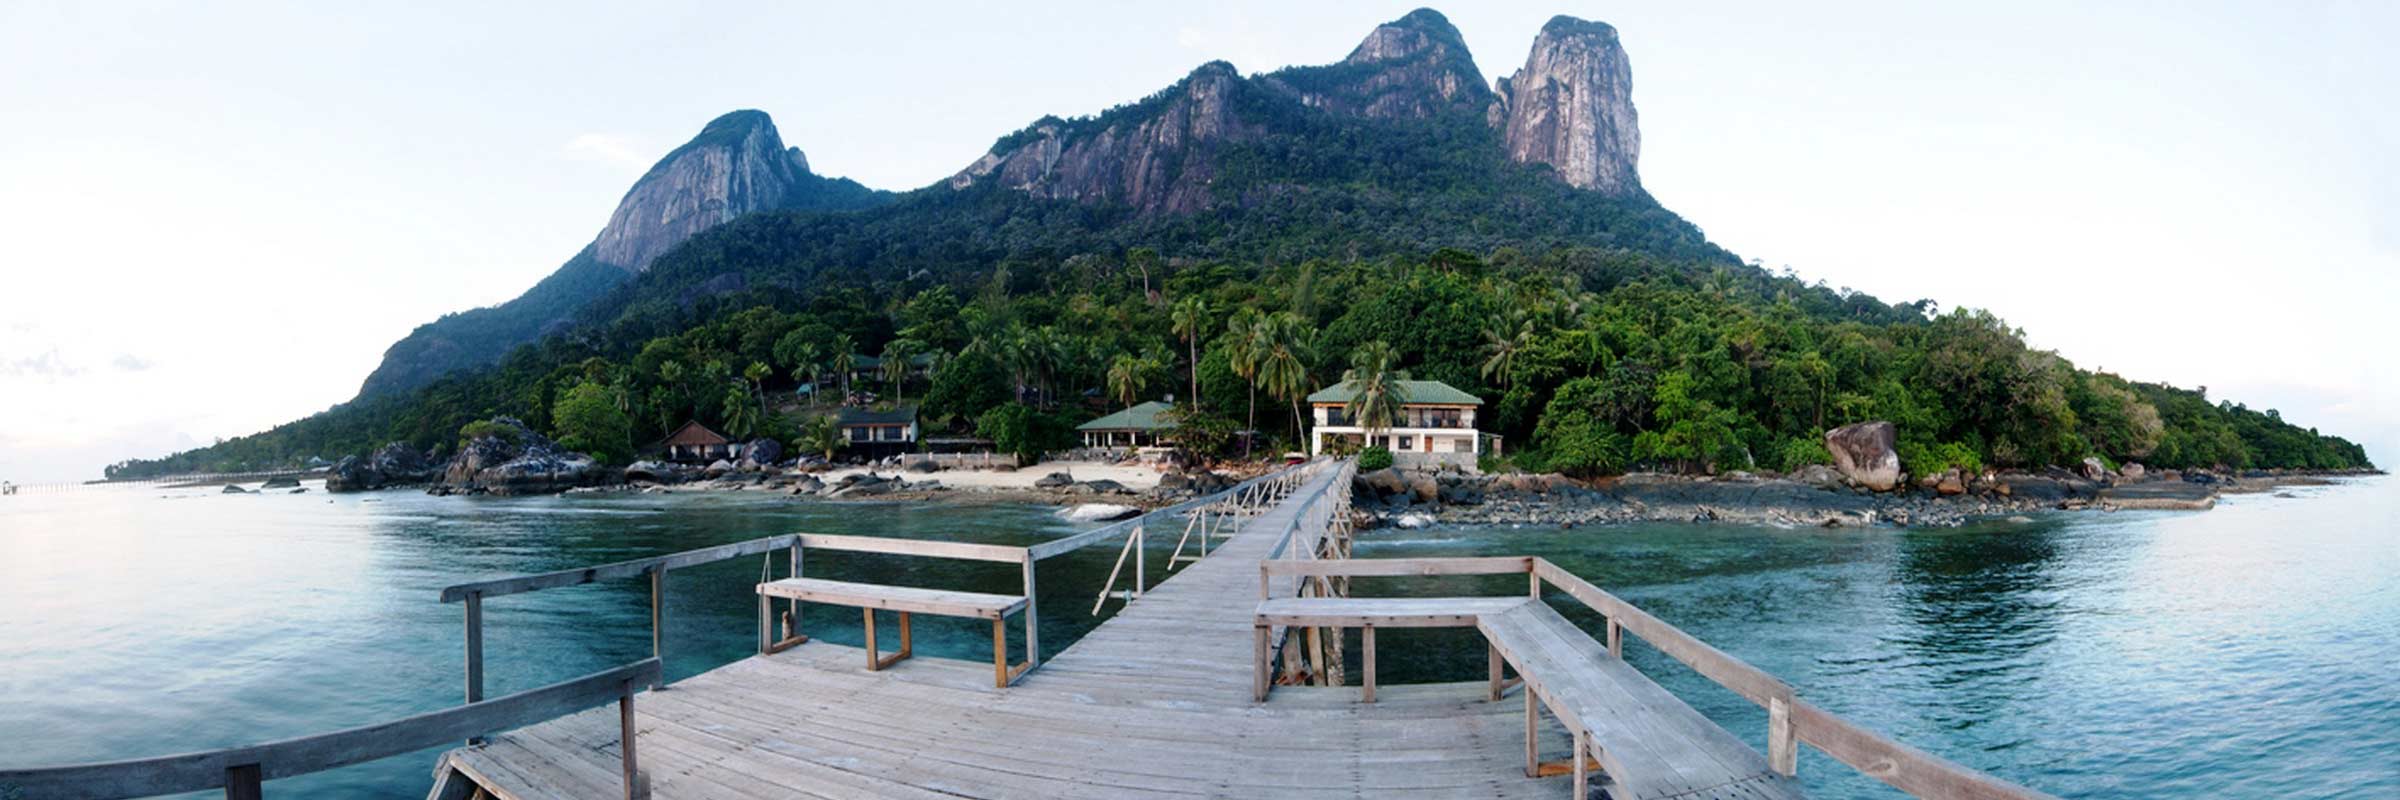 Minang Cove Resort Ansicht Steg